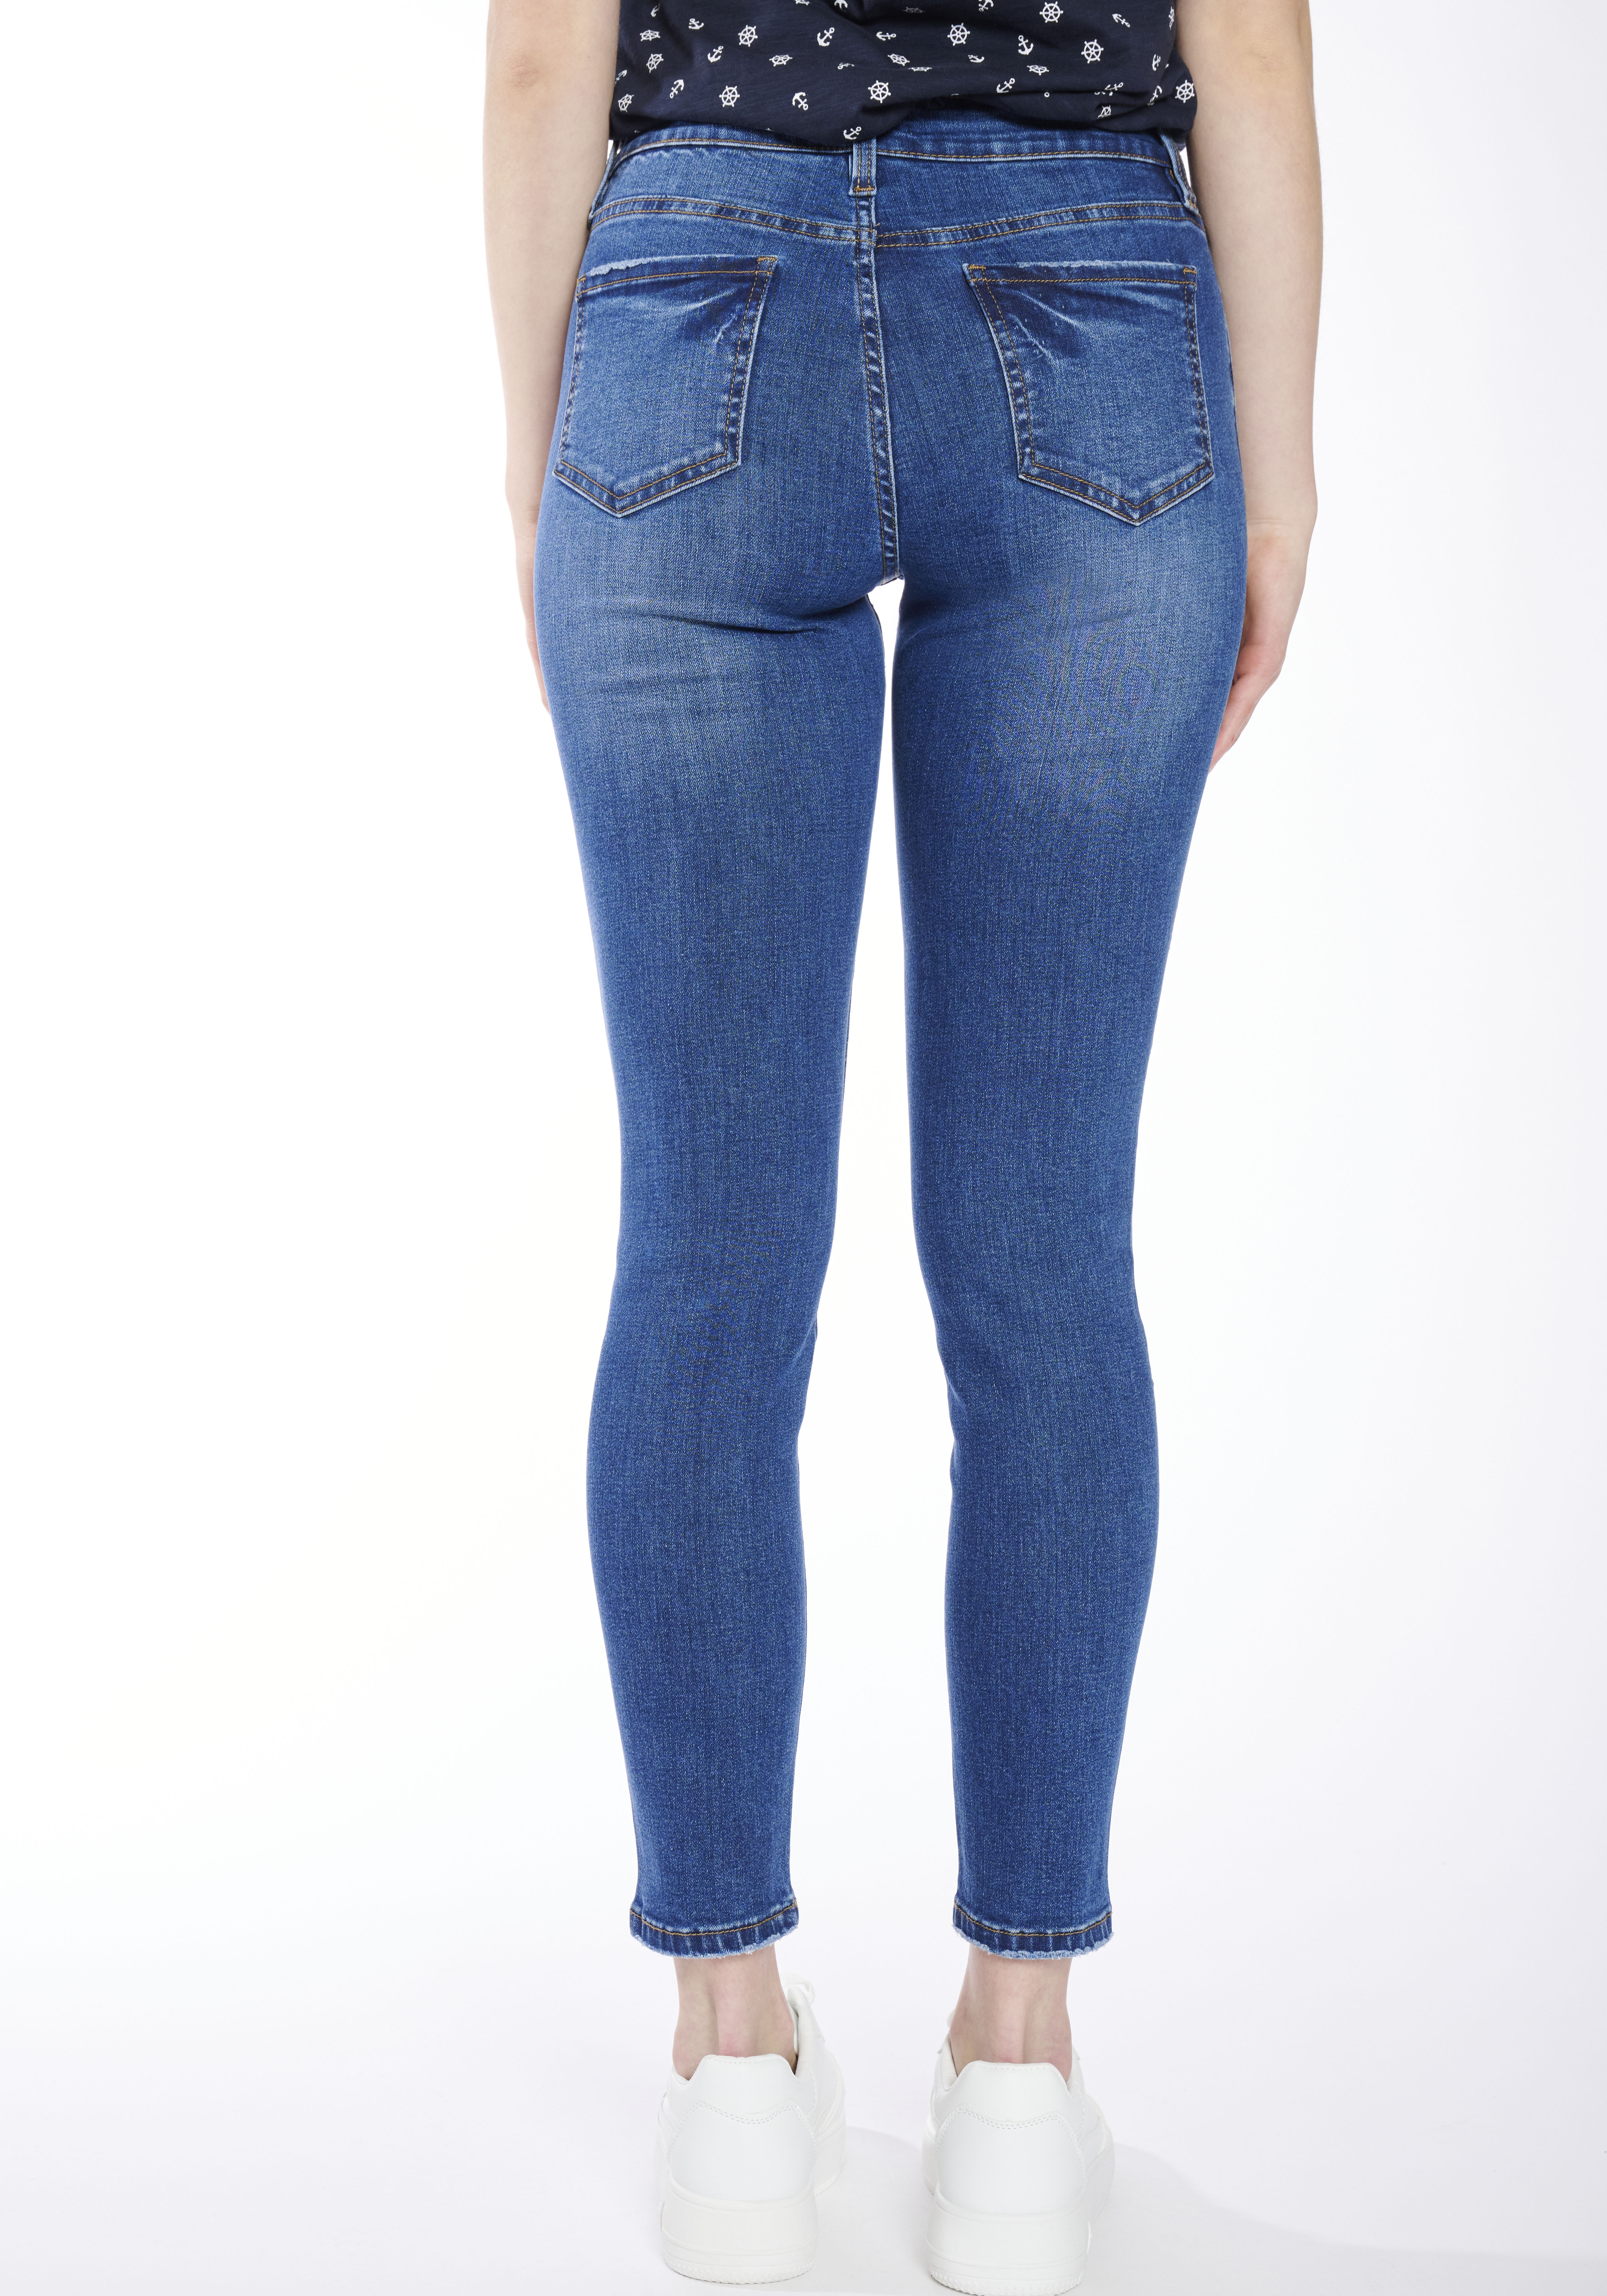 HaILY’S 5-Pocket-Jeans LG HW C JN Be44lla günstig online kaufen